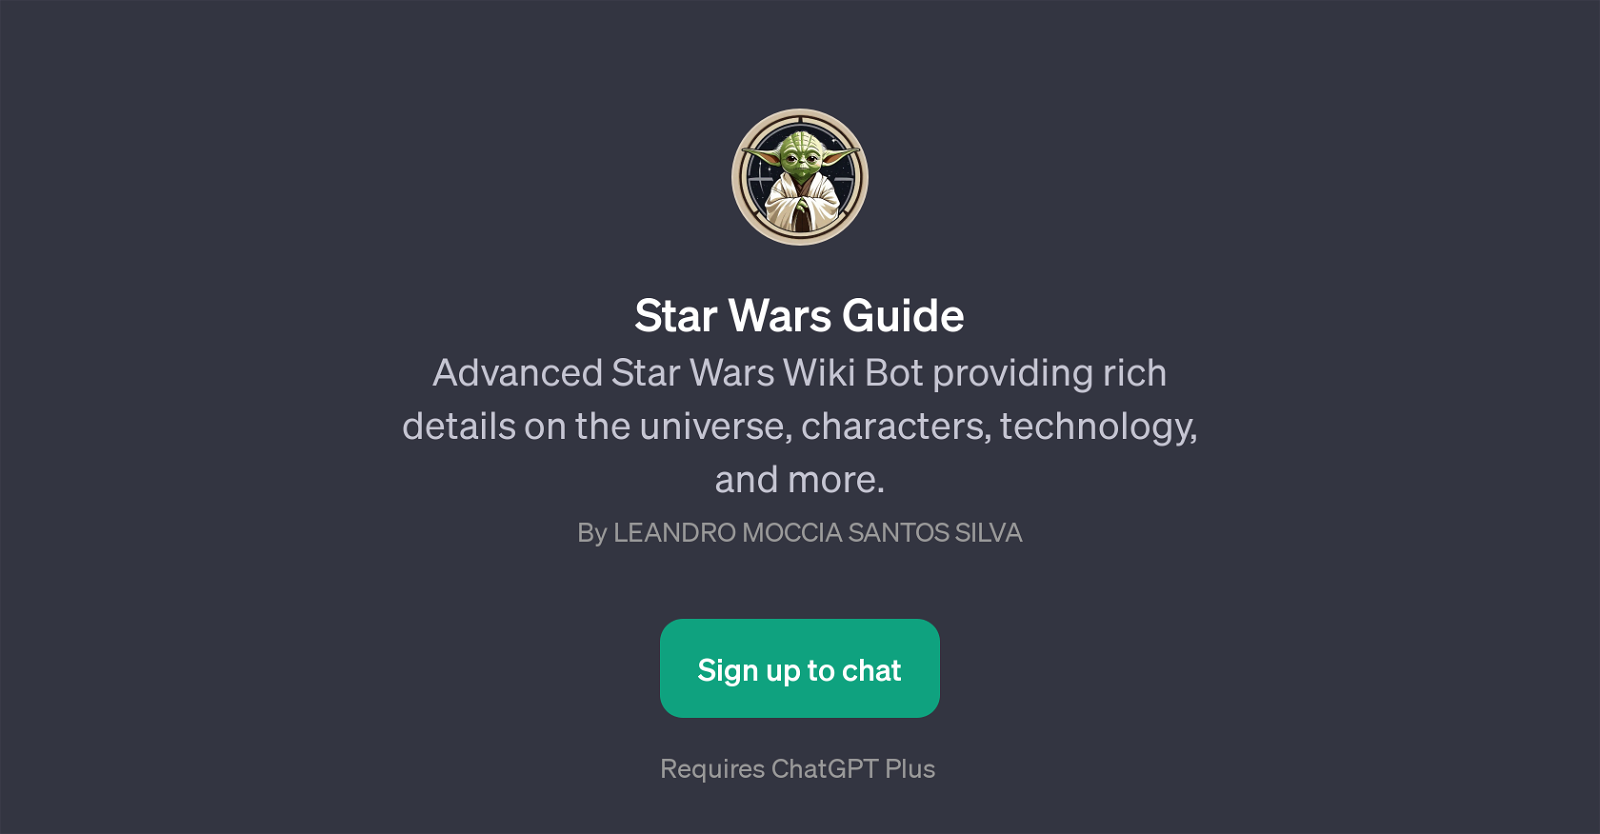 Star Wars Guide website